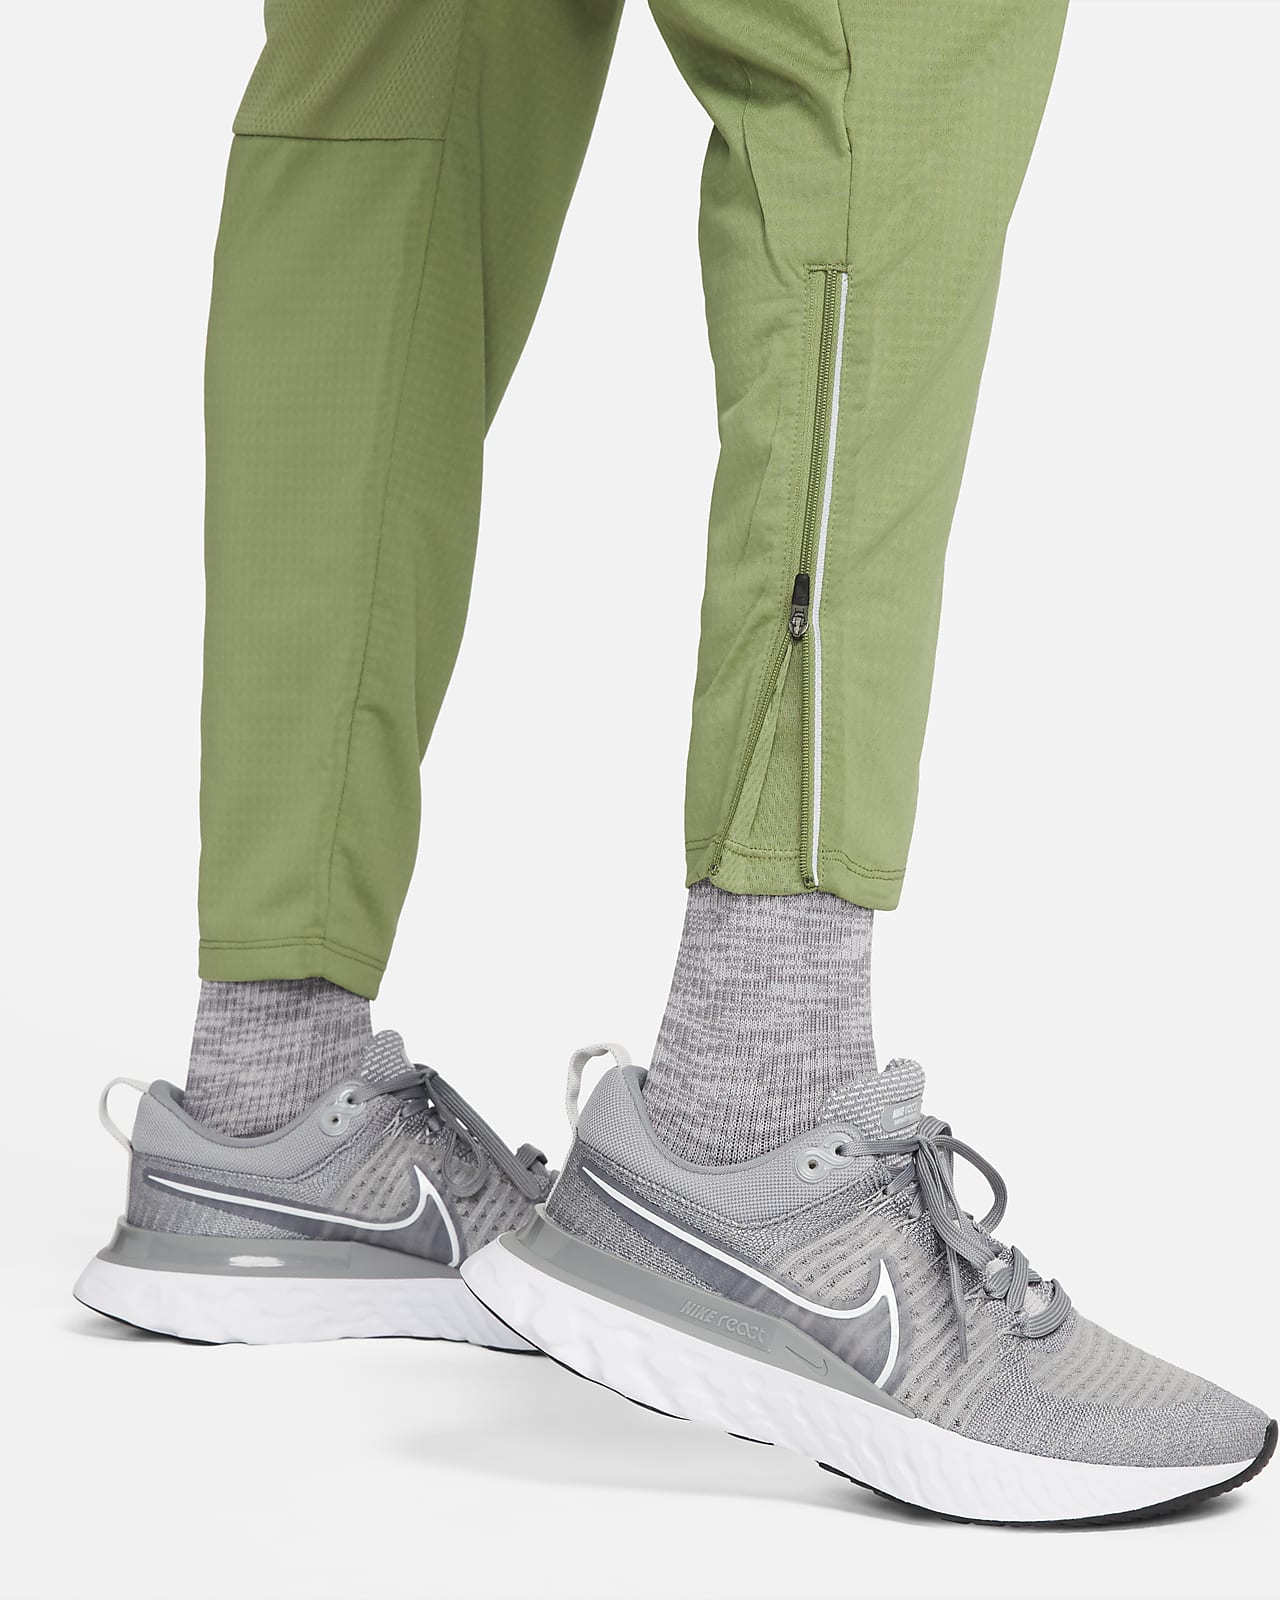 Nike Dri-Fit Phenom Elite Knit Trail Running Pants - Running tights Men's, Buy online